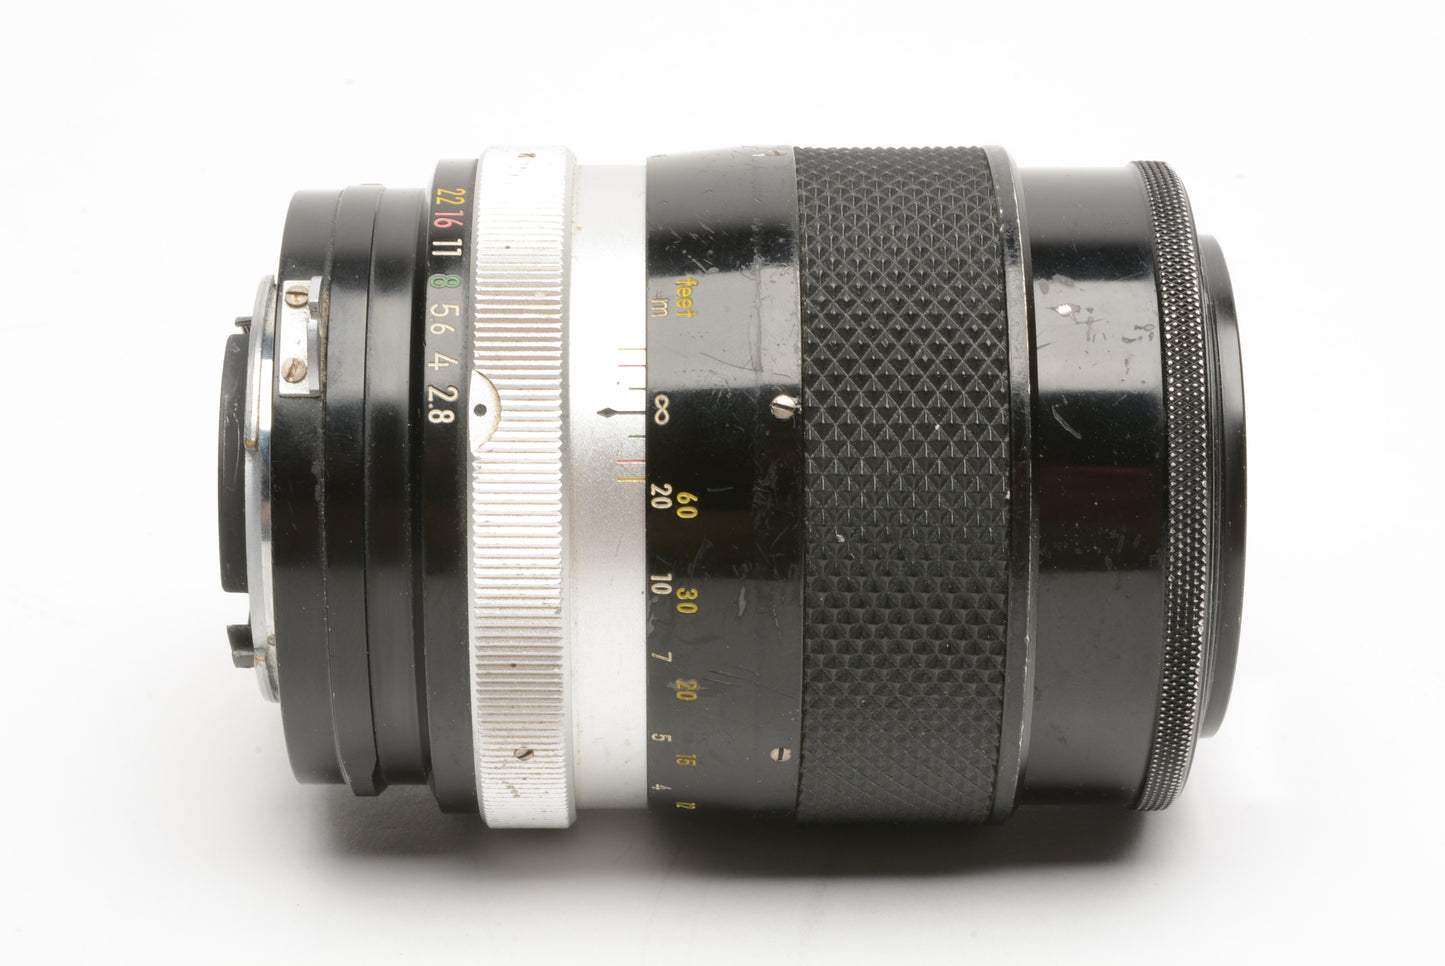 Nikon Nikkor-Q 135mm f2.8 Non-AI portrait lens, clean and sharp, caps